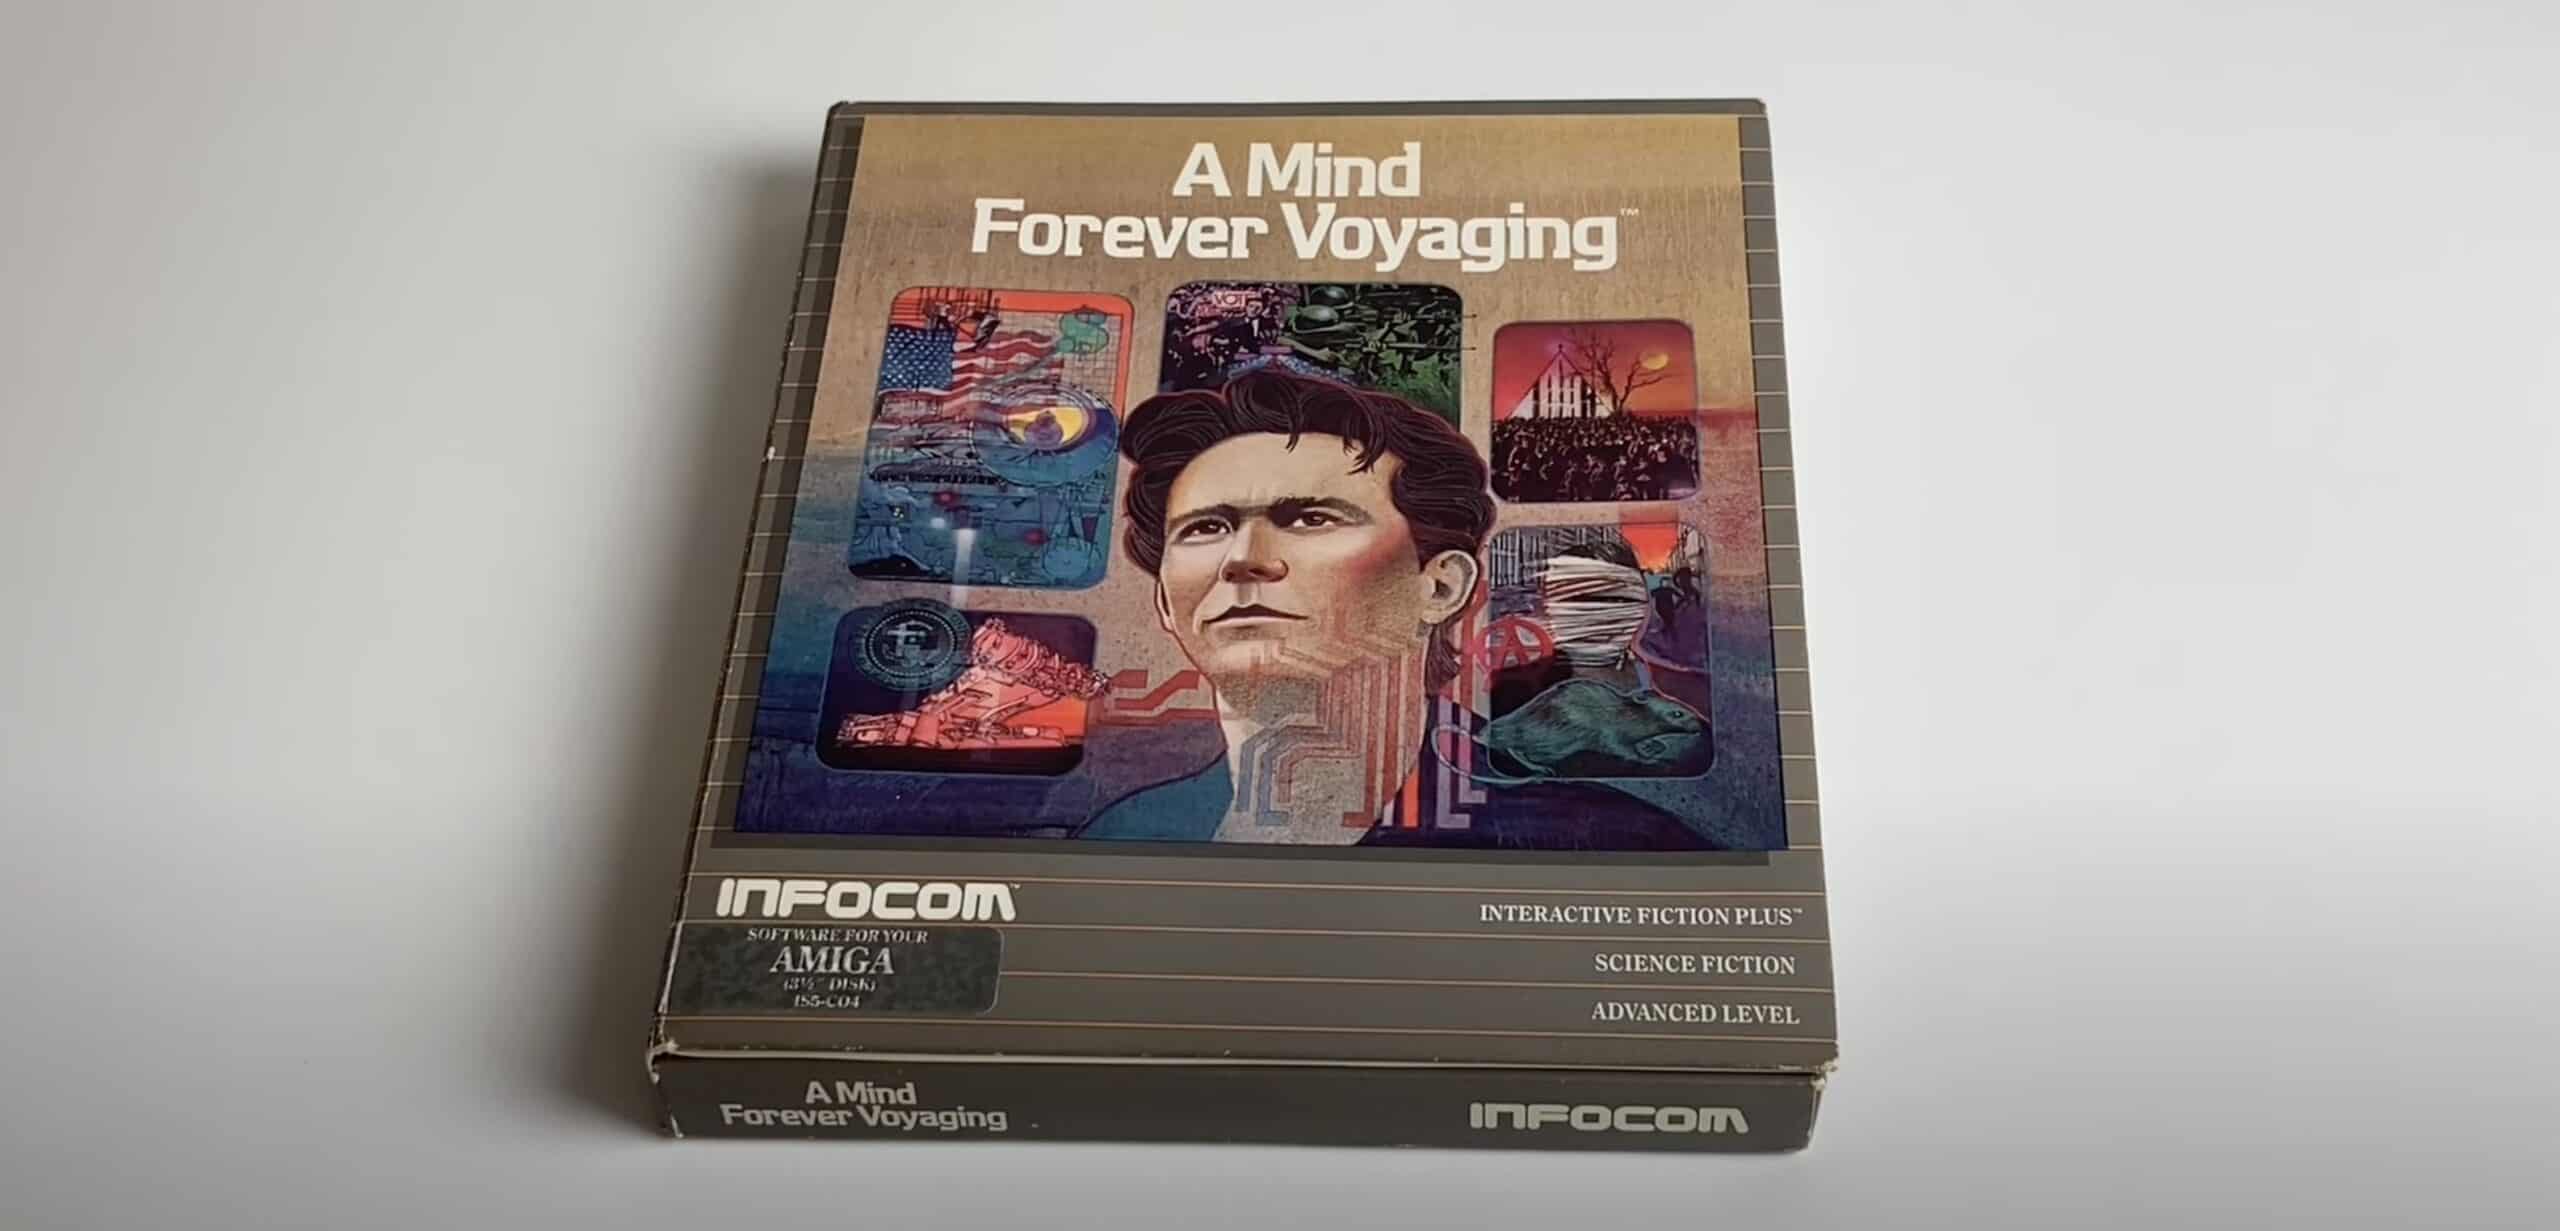 A Mind Forever Voyaging packaging